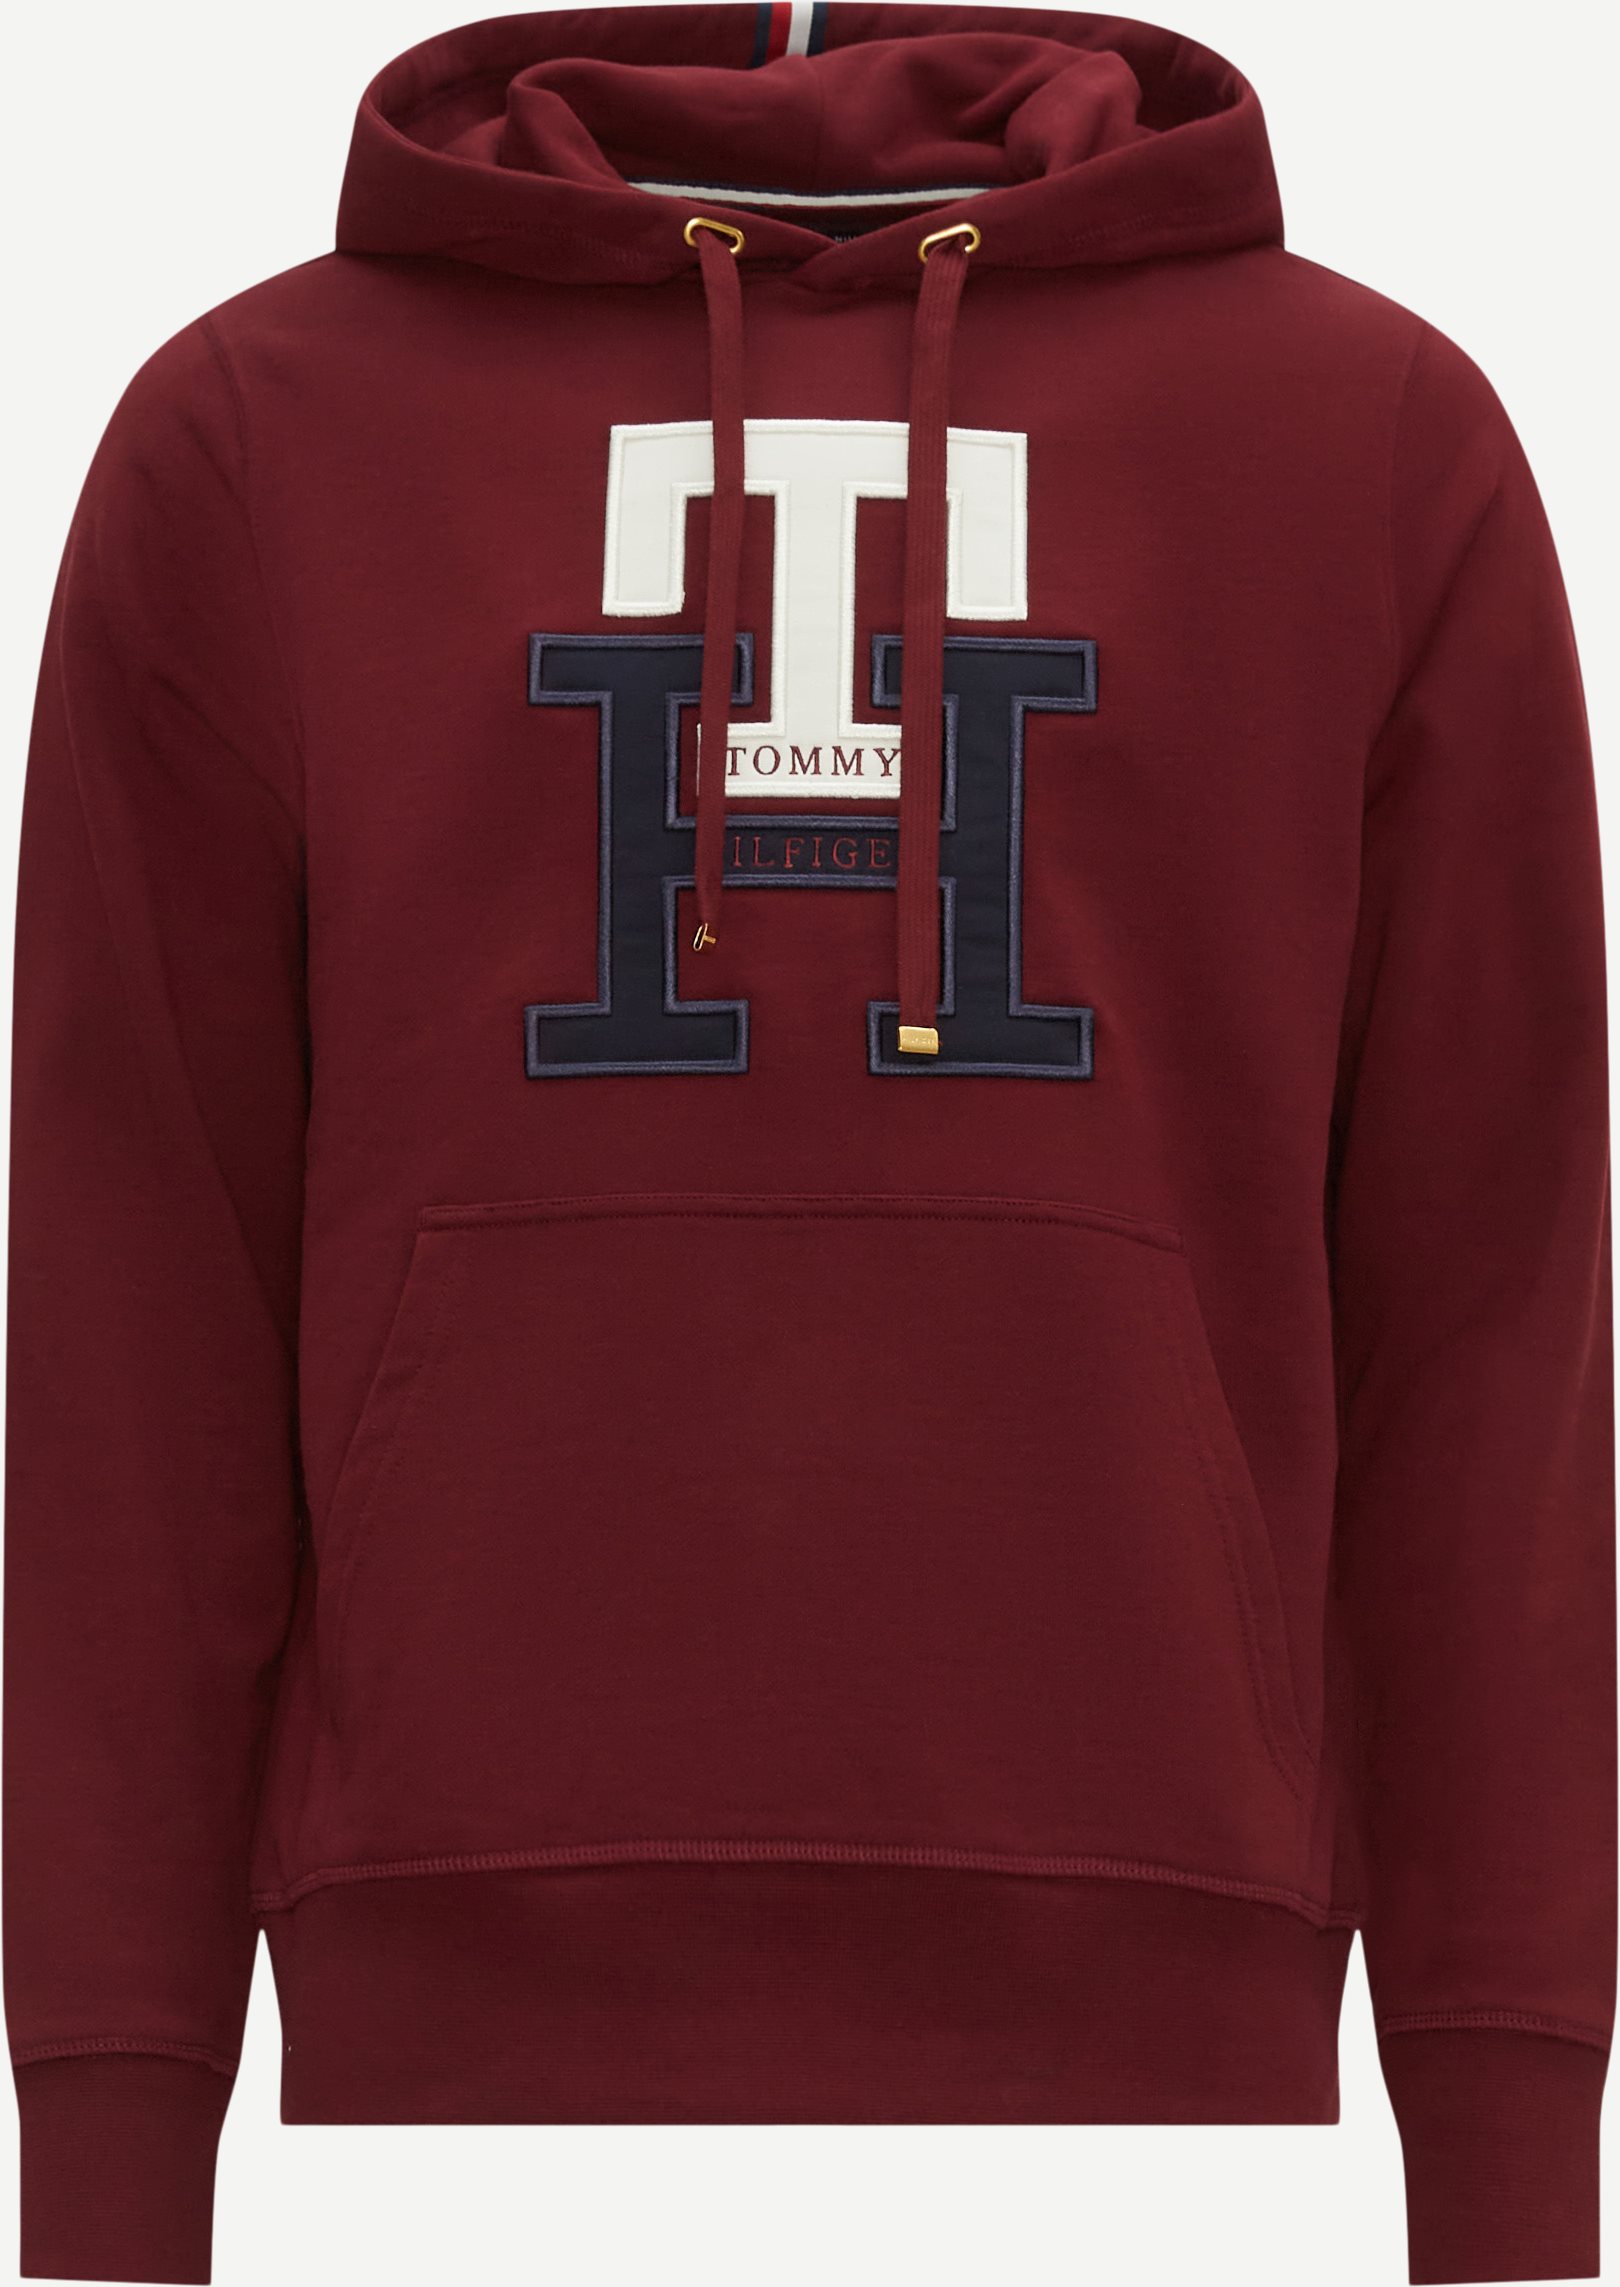 Tommy Hilfiger Sweatshirts 28187 LUX MONOGRAM HOODY Bordeaux